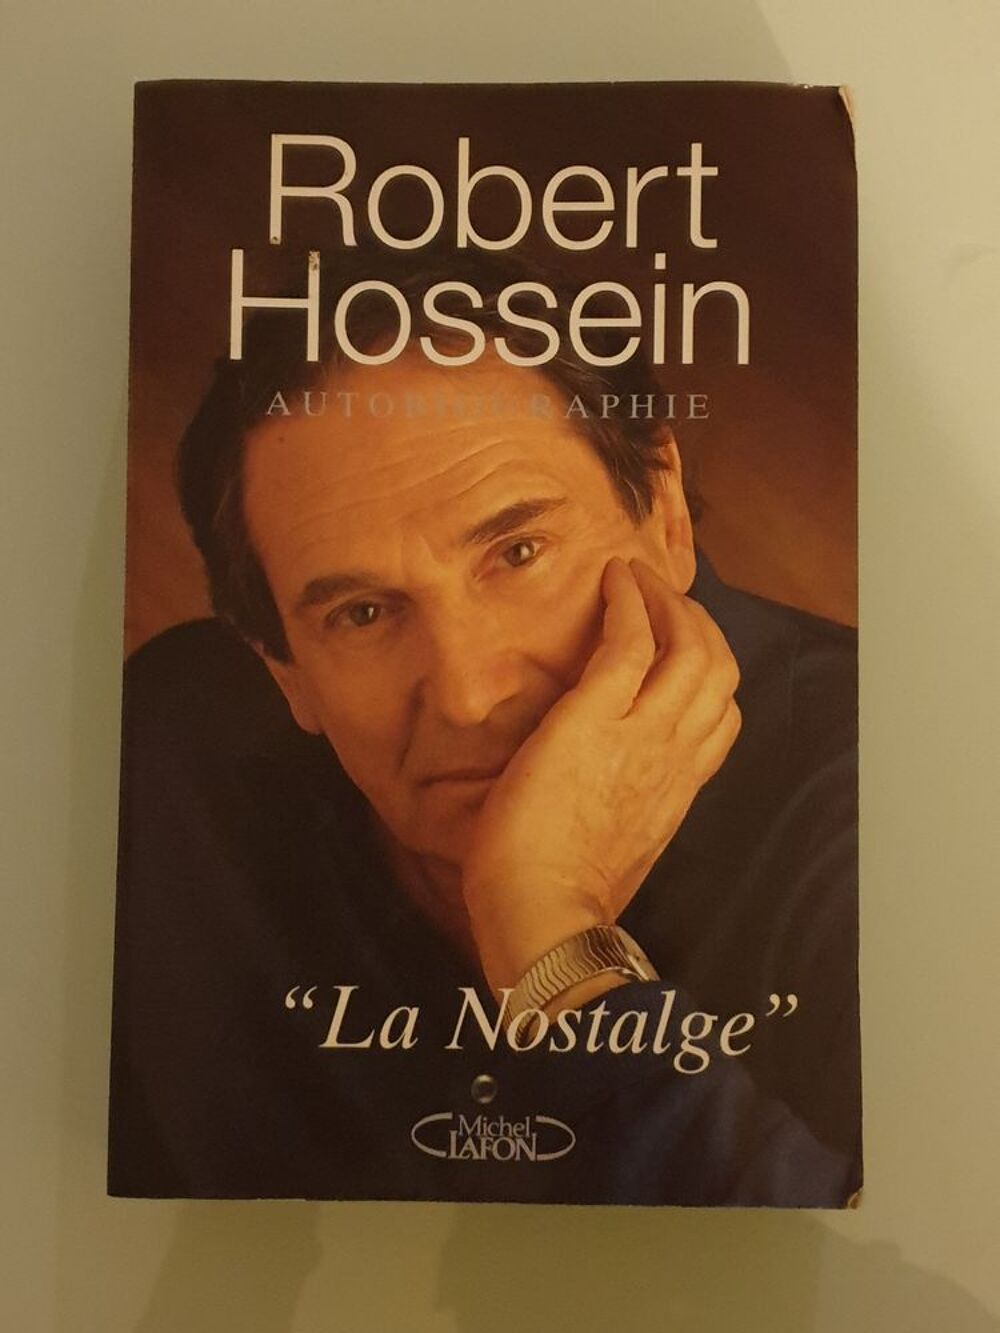 La Nostalge - robert hossein
Marseille 9 eme Livres et BD